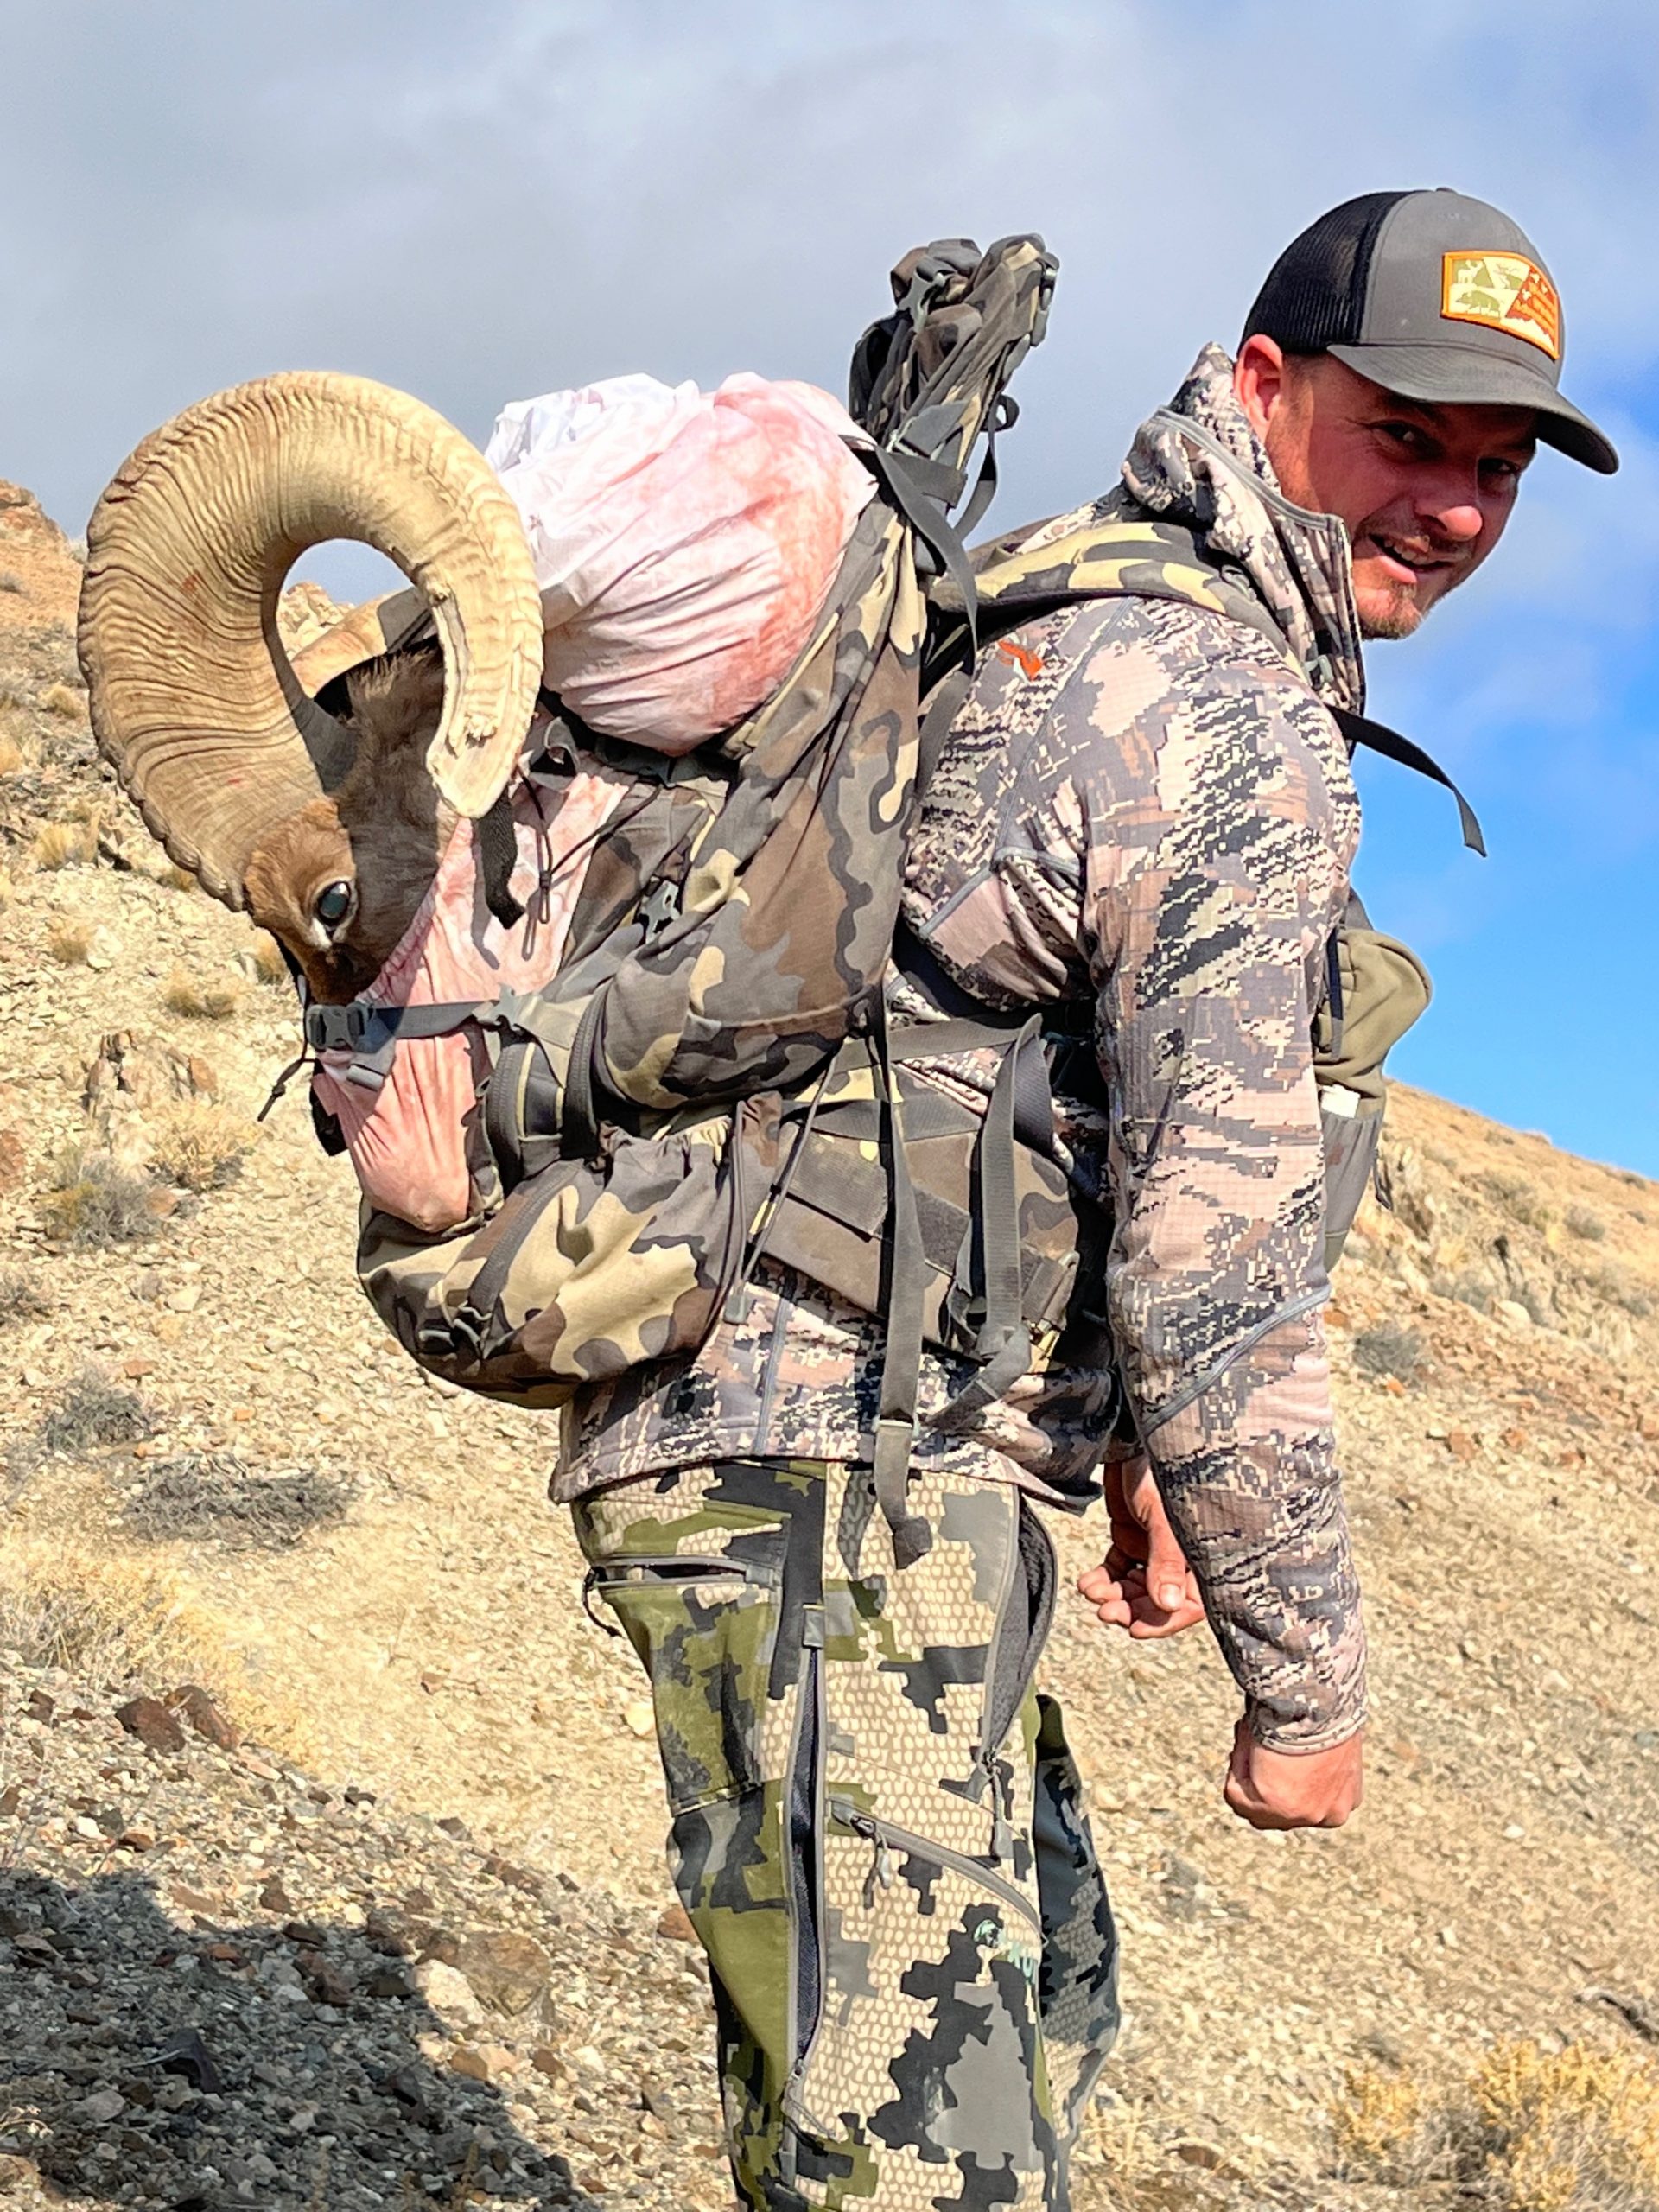 Nevada sheep hunt